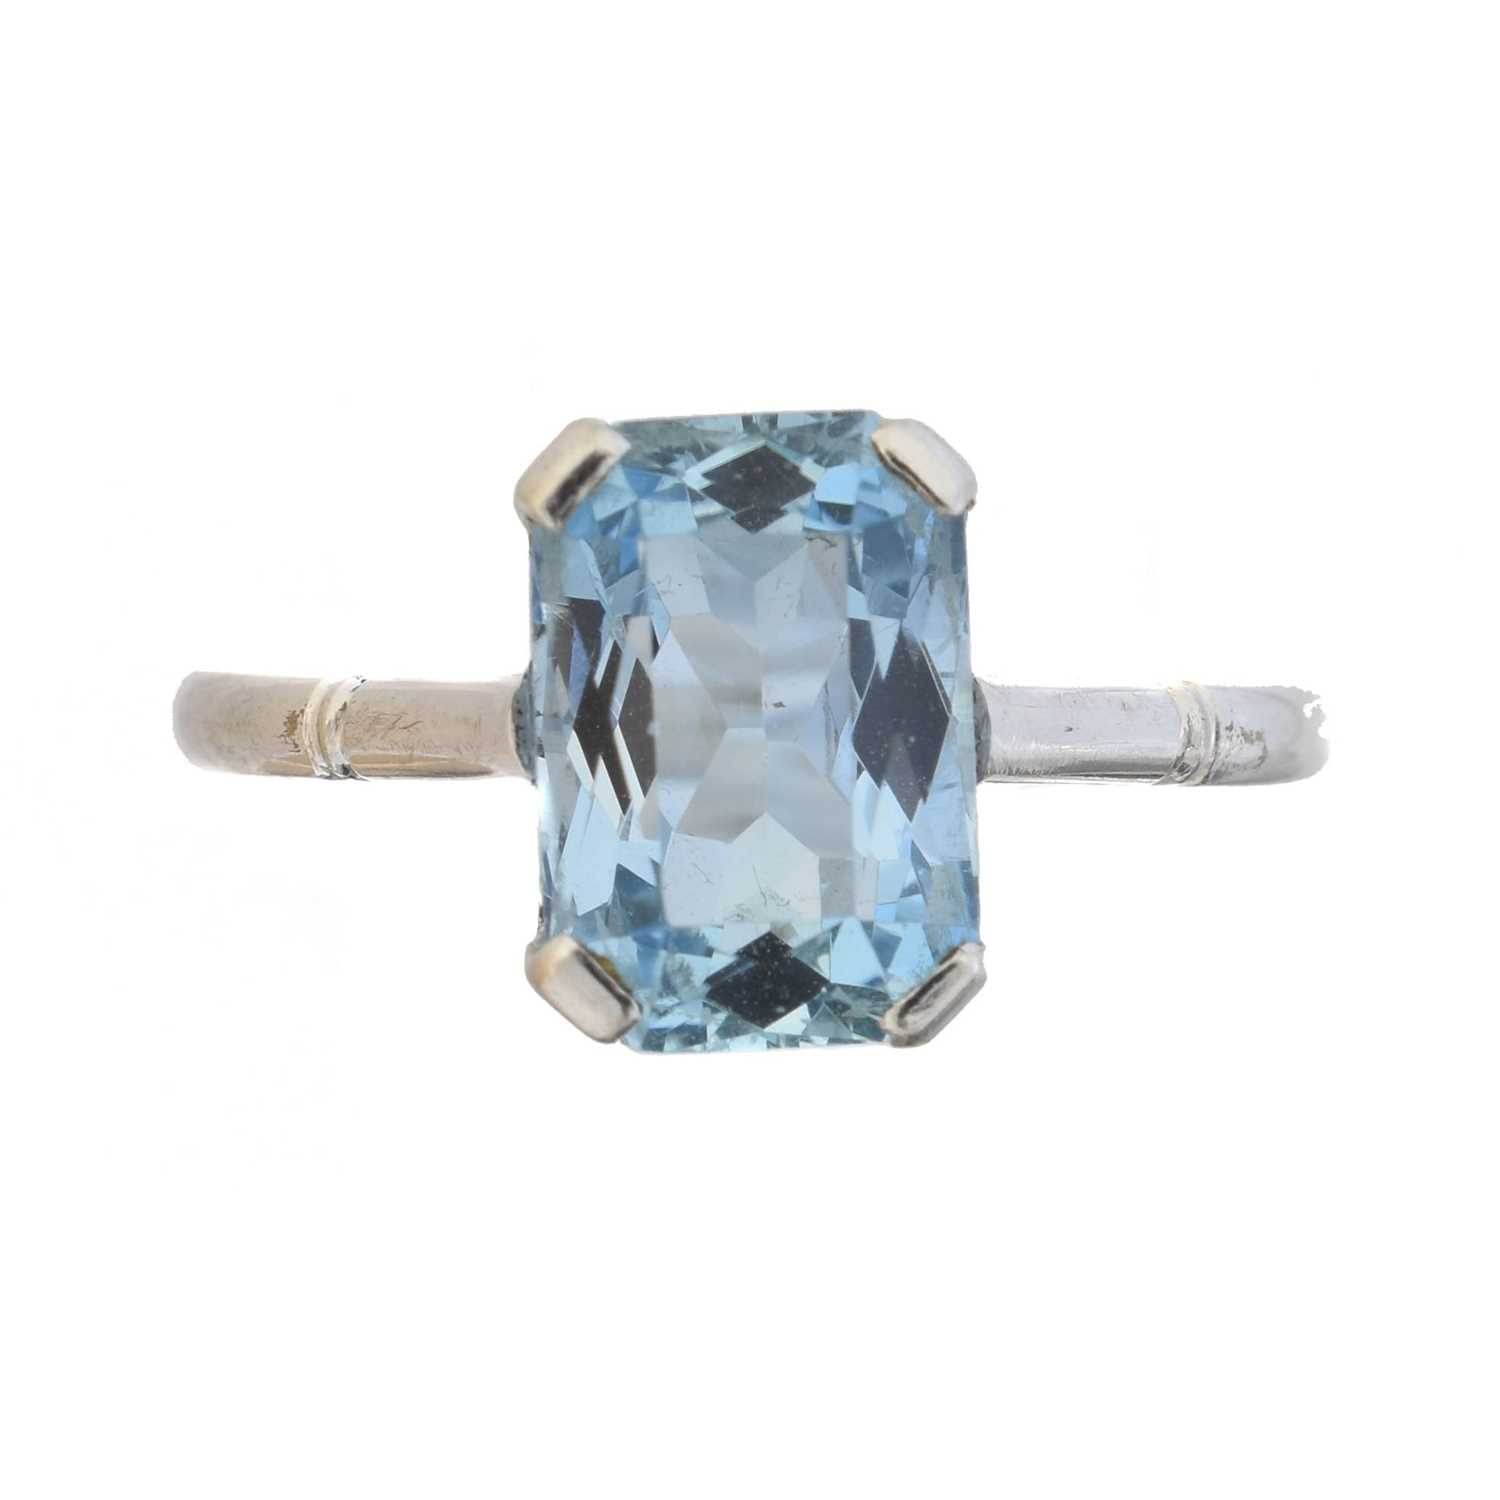 Lot 72 - An aquamarine single stone ring